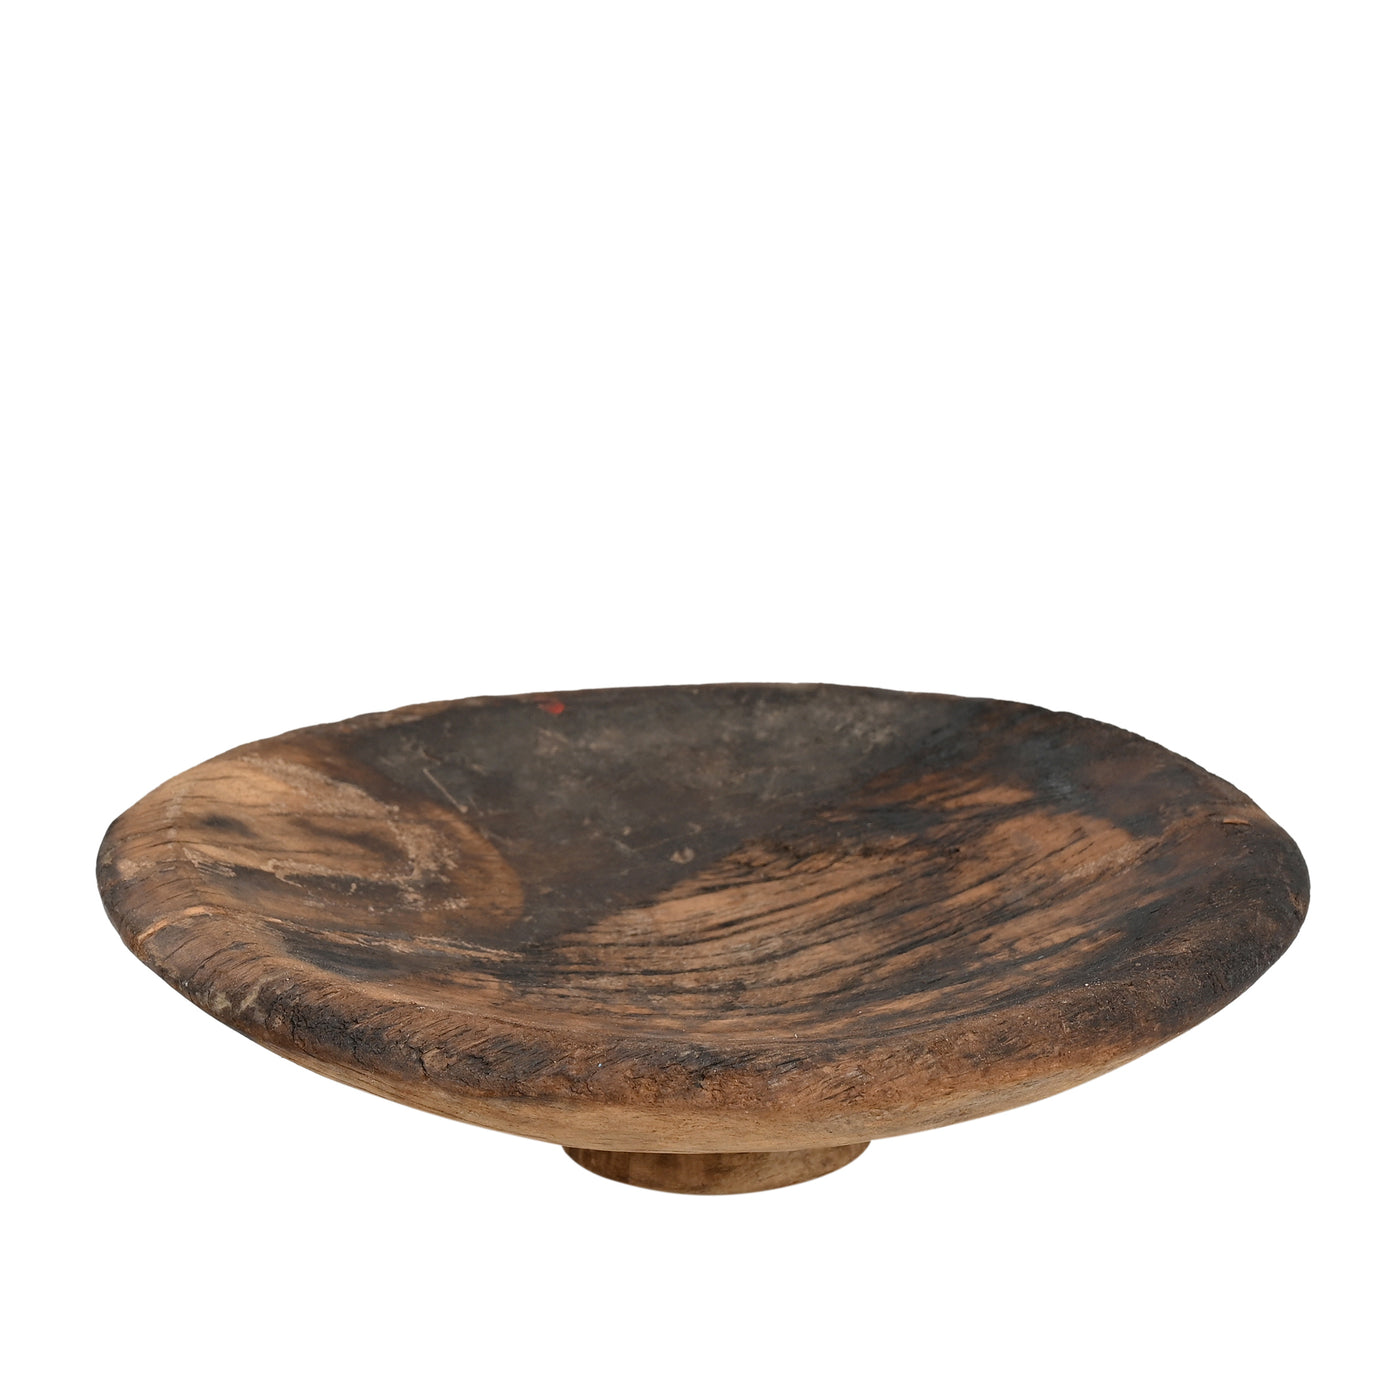 Katora - Wooden plate n ° 35